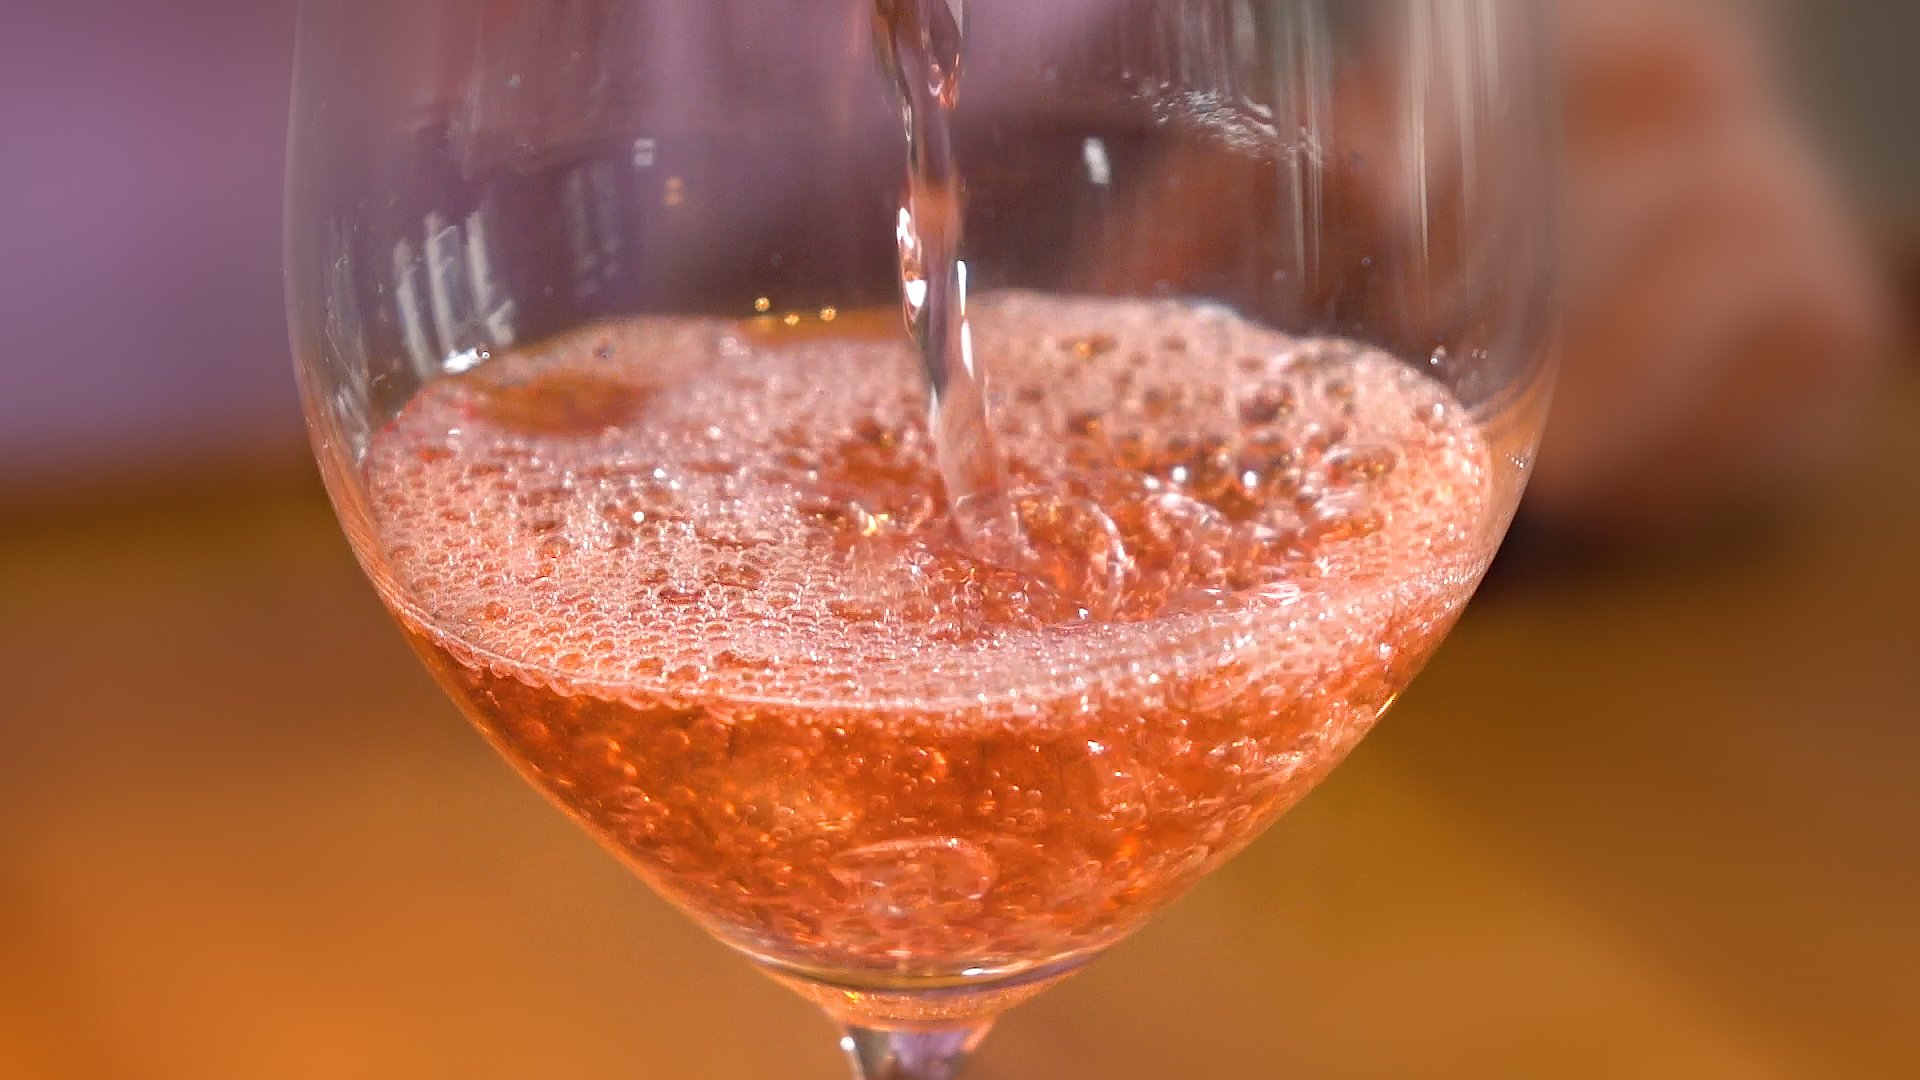 Escofet: "Impresionante vino rosado"